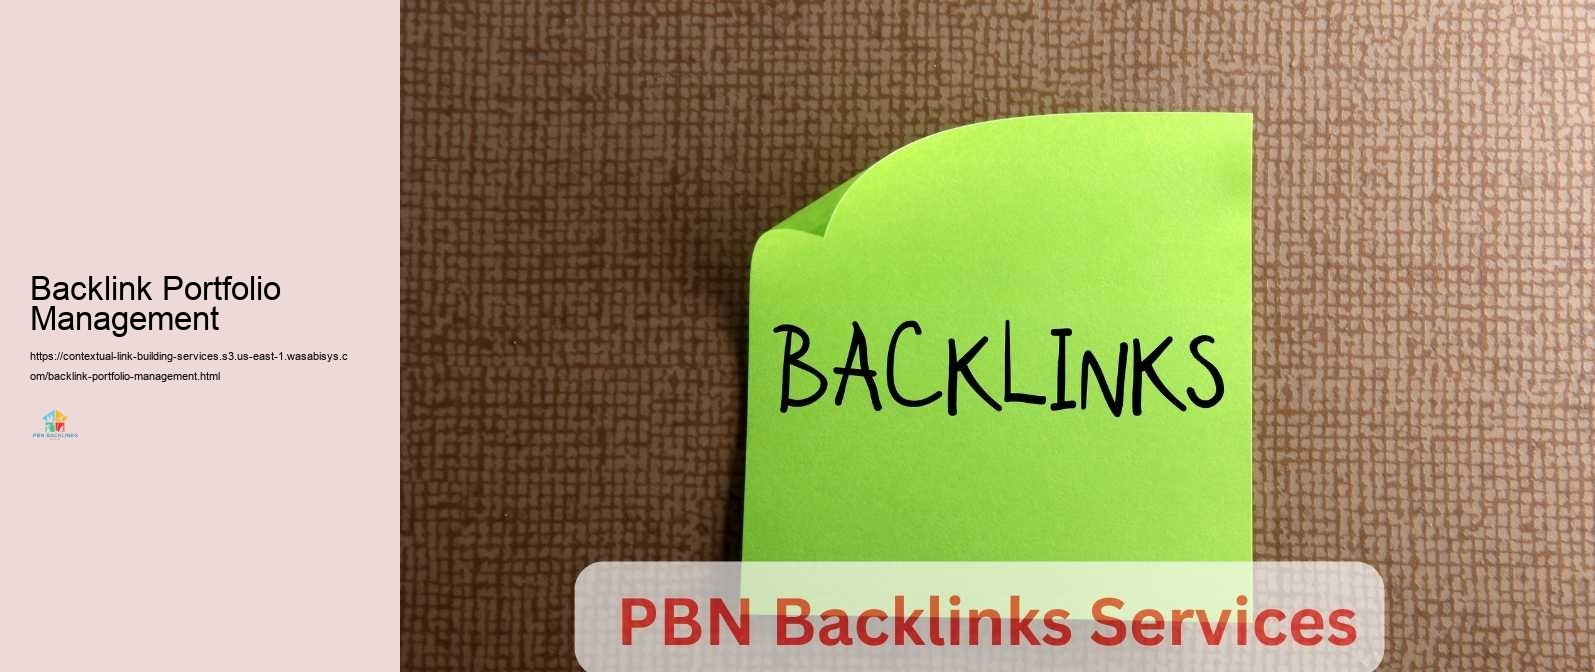 Backlink Portfolio Management